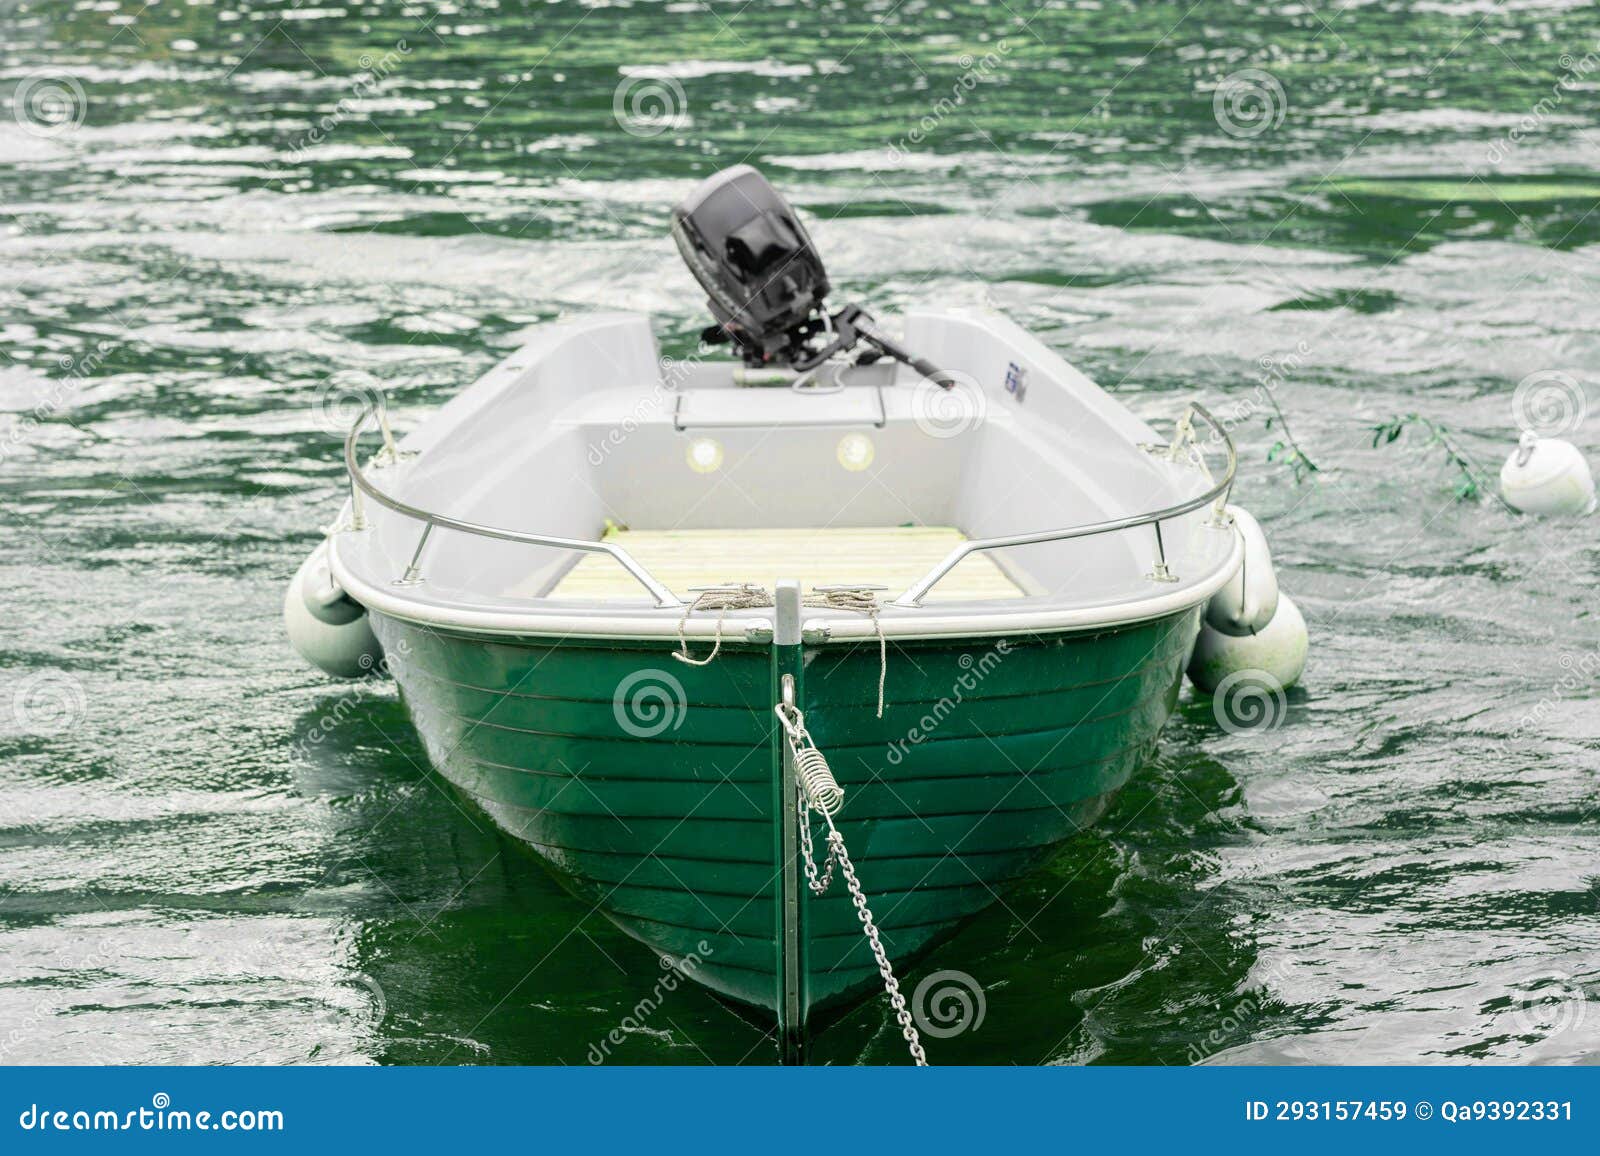 https://thumbs.dreamstime.com/z/small-fishing-boat-fishing-net-equipment-motor-boat-sail-boat-floating-small-fishing-boat-fishing-net-293157459.jpg